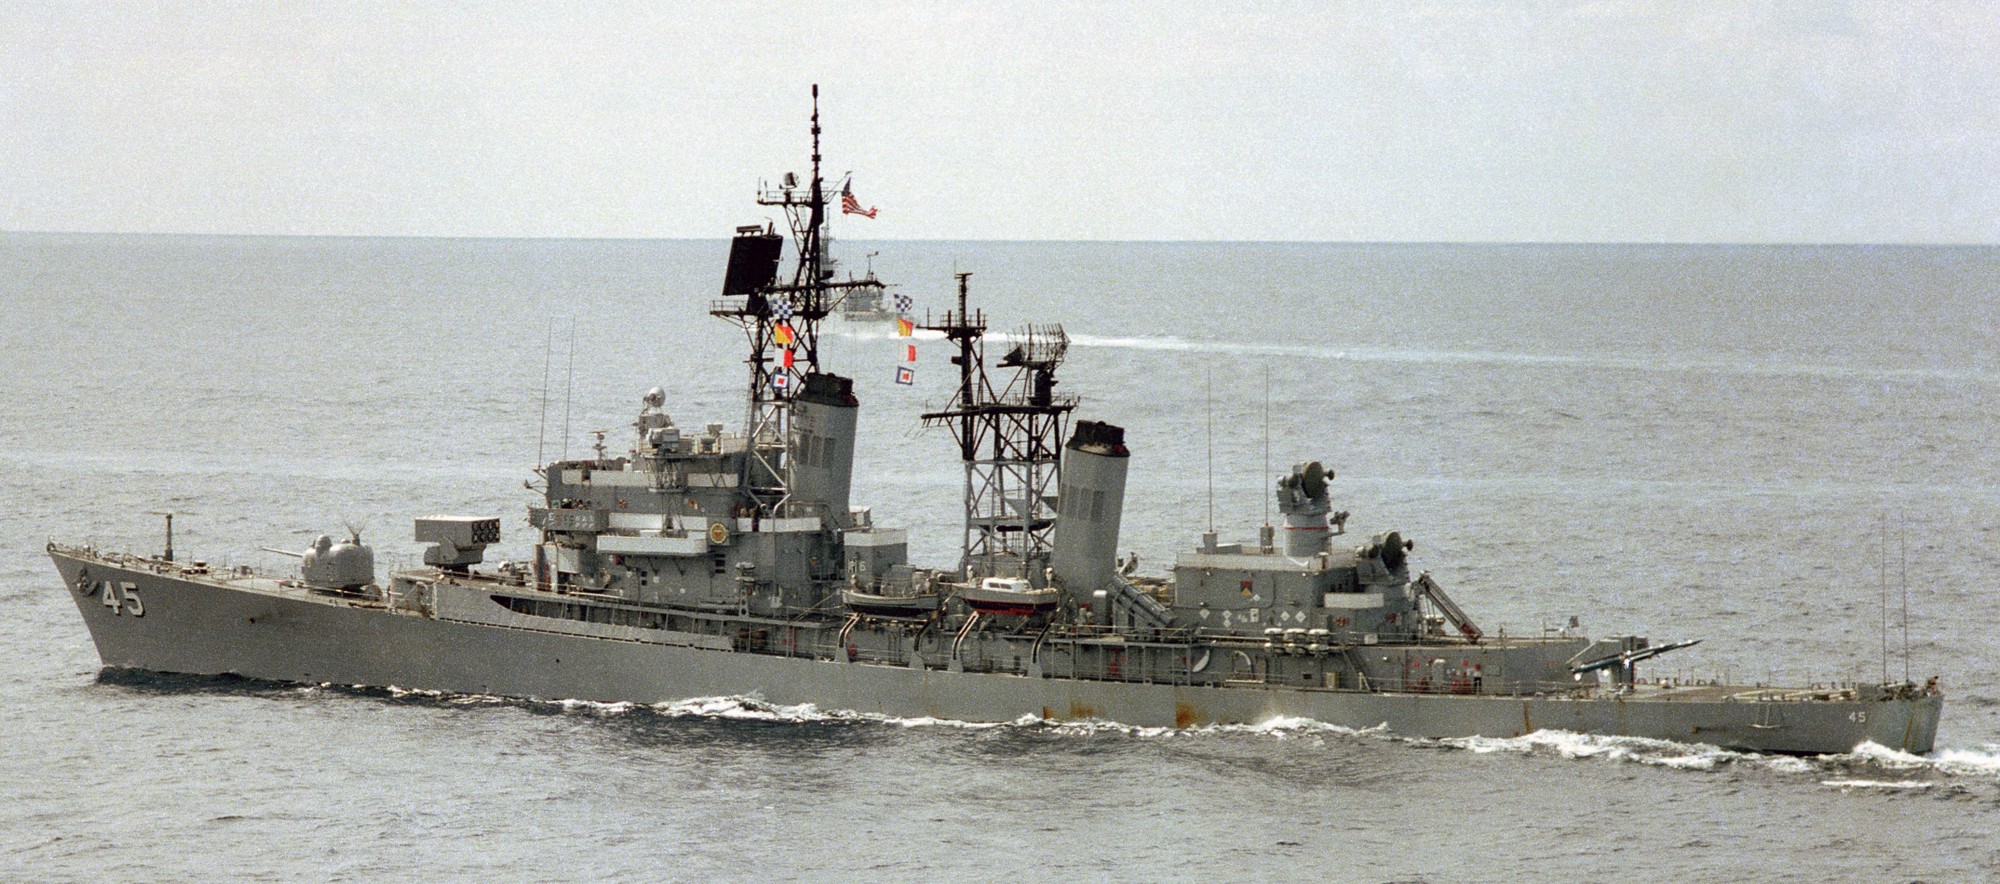 ddg-45 uss dewey farragut class destroyer us navy 1988 10